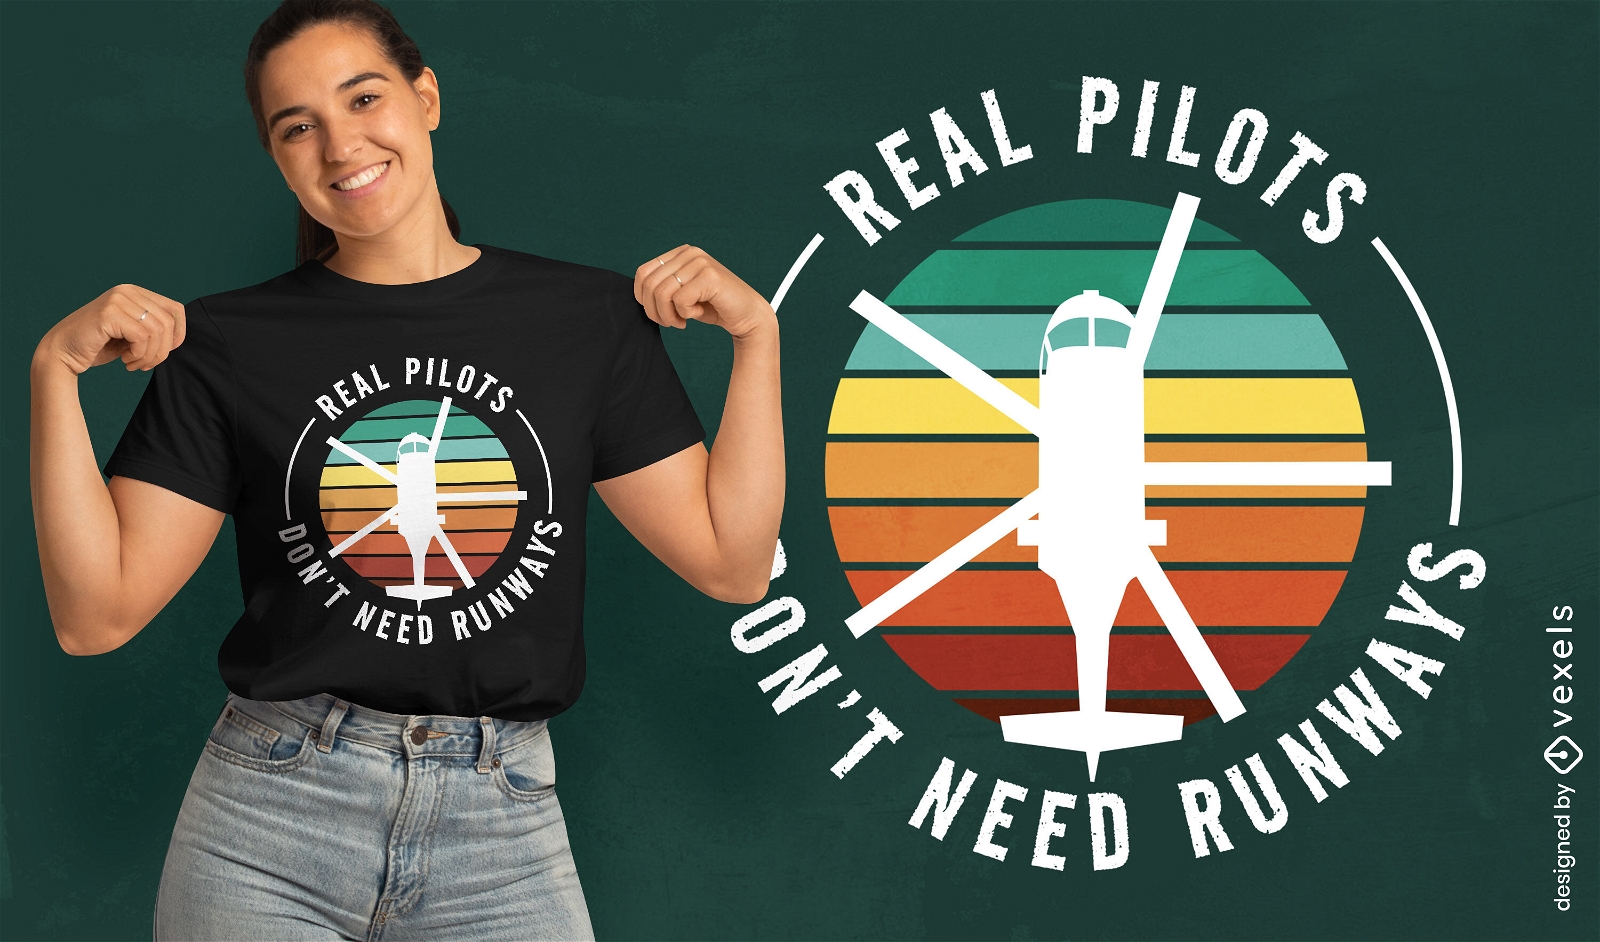 Real pilots don't need runways t-shirt design